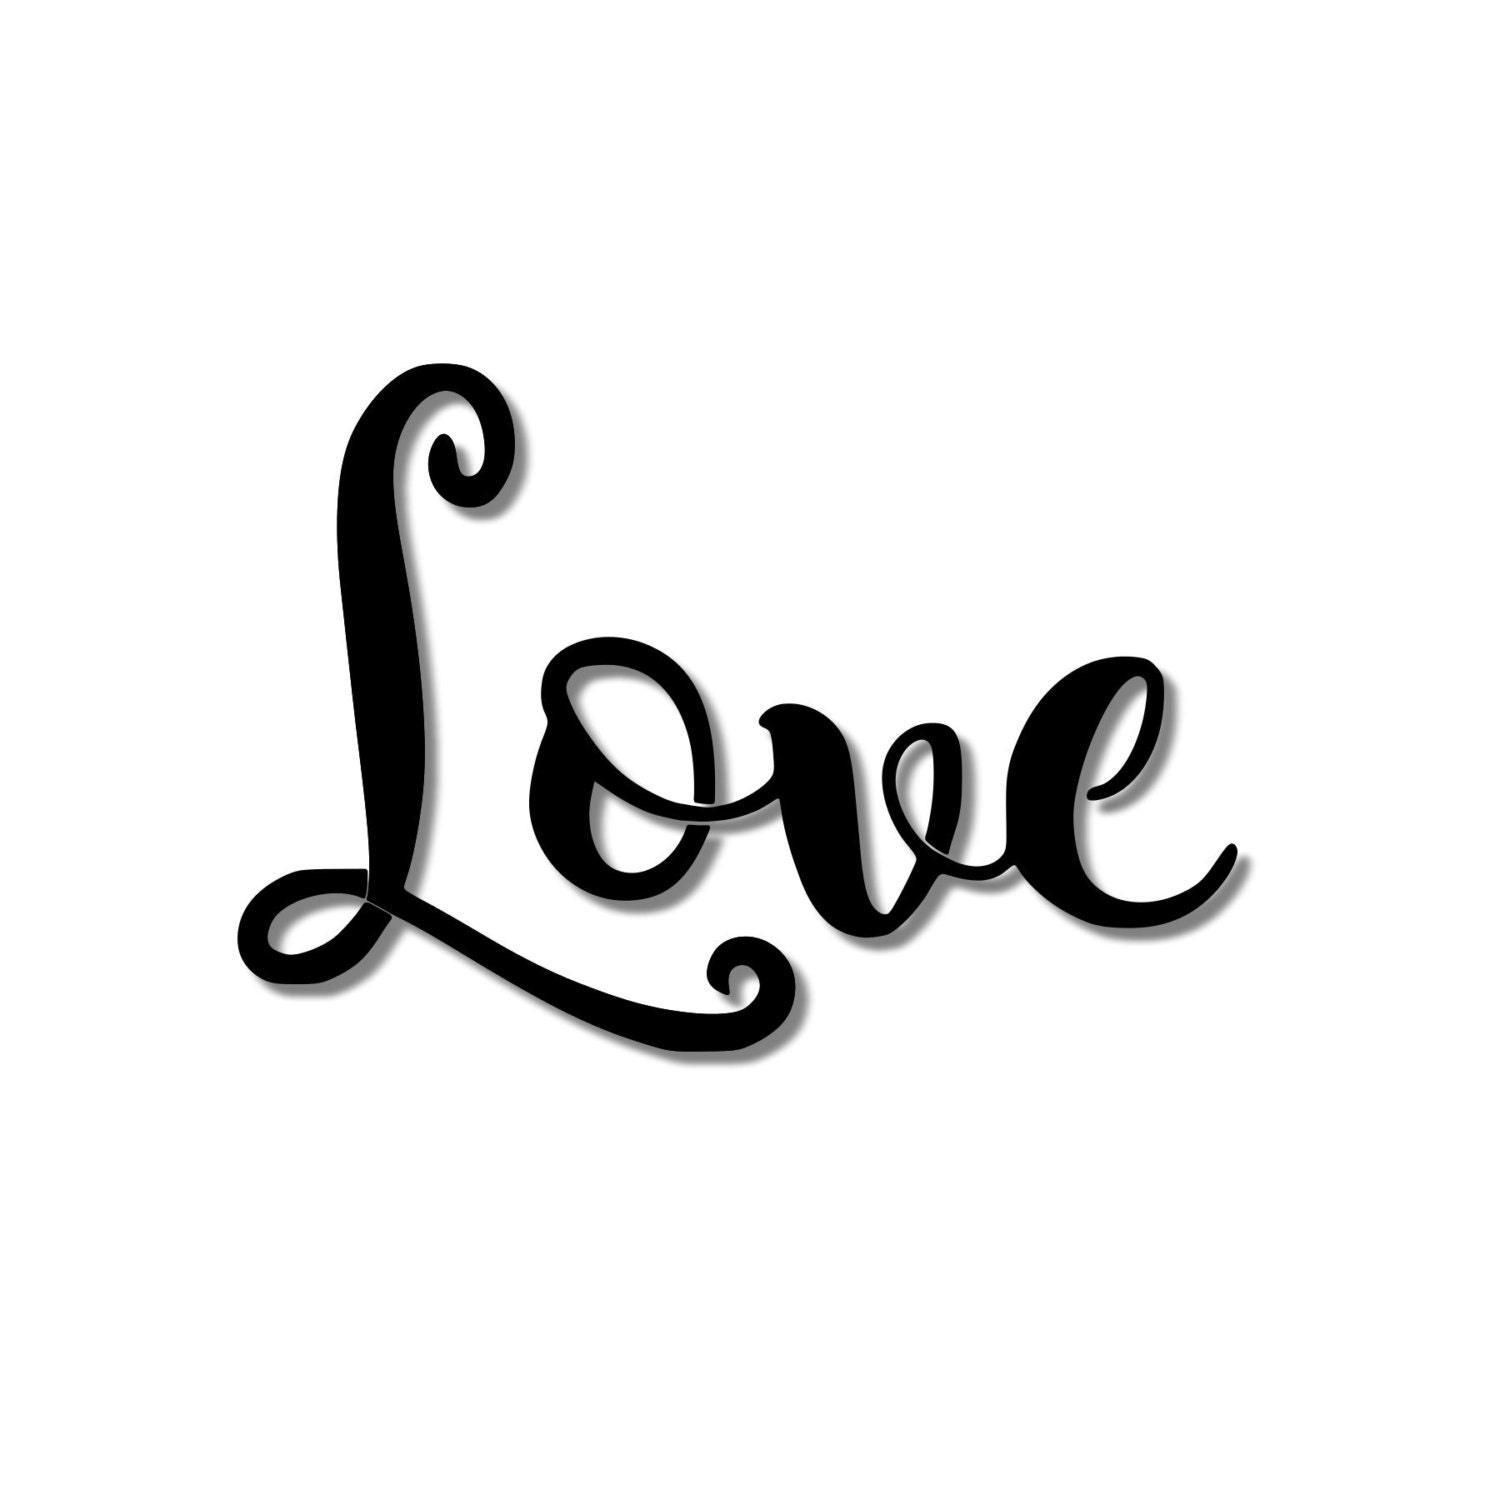 love-cursive-script-stencil-by-meadowflowerdesigns-on-etsy